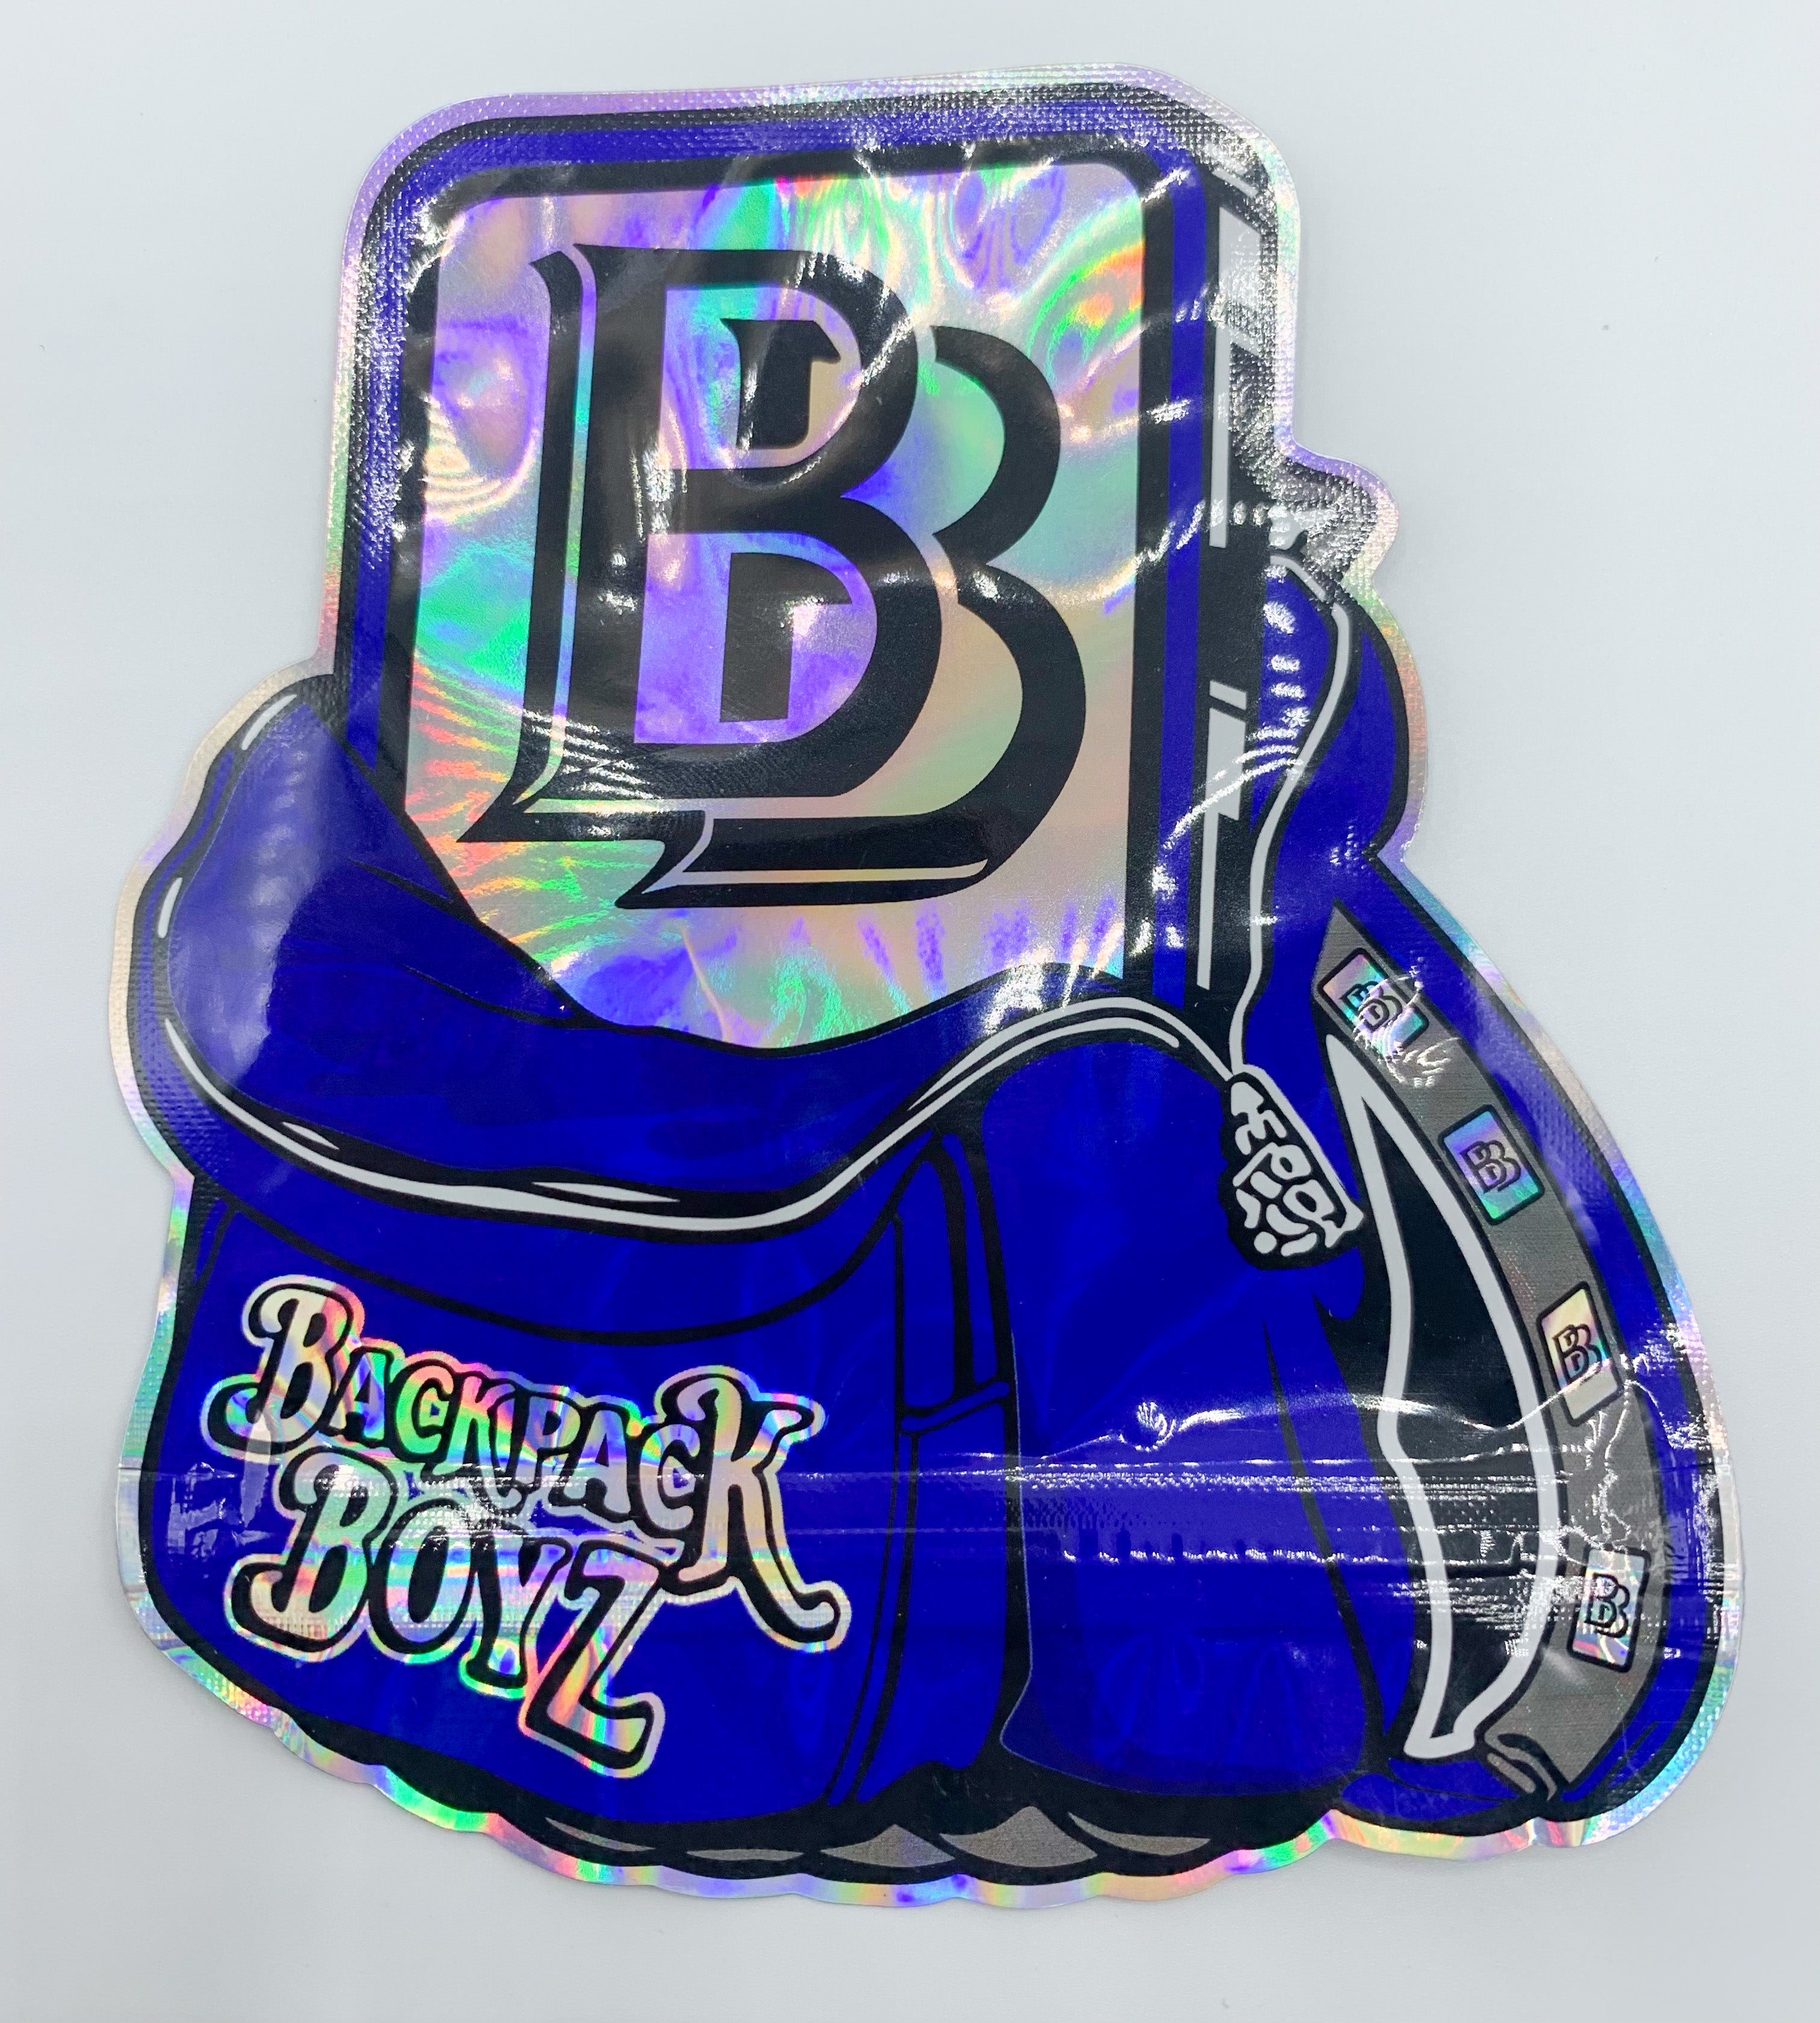 3D Backpackboyz blue 3.5g Mylar Bags